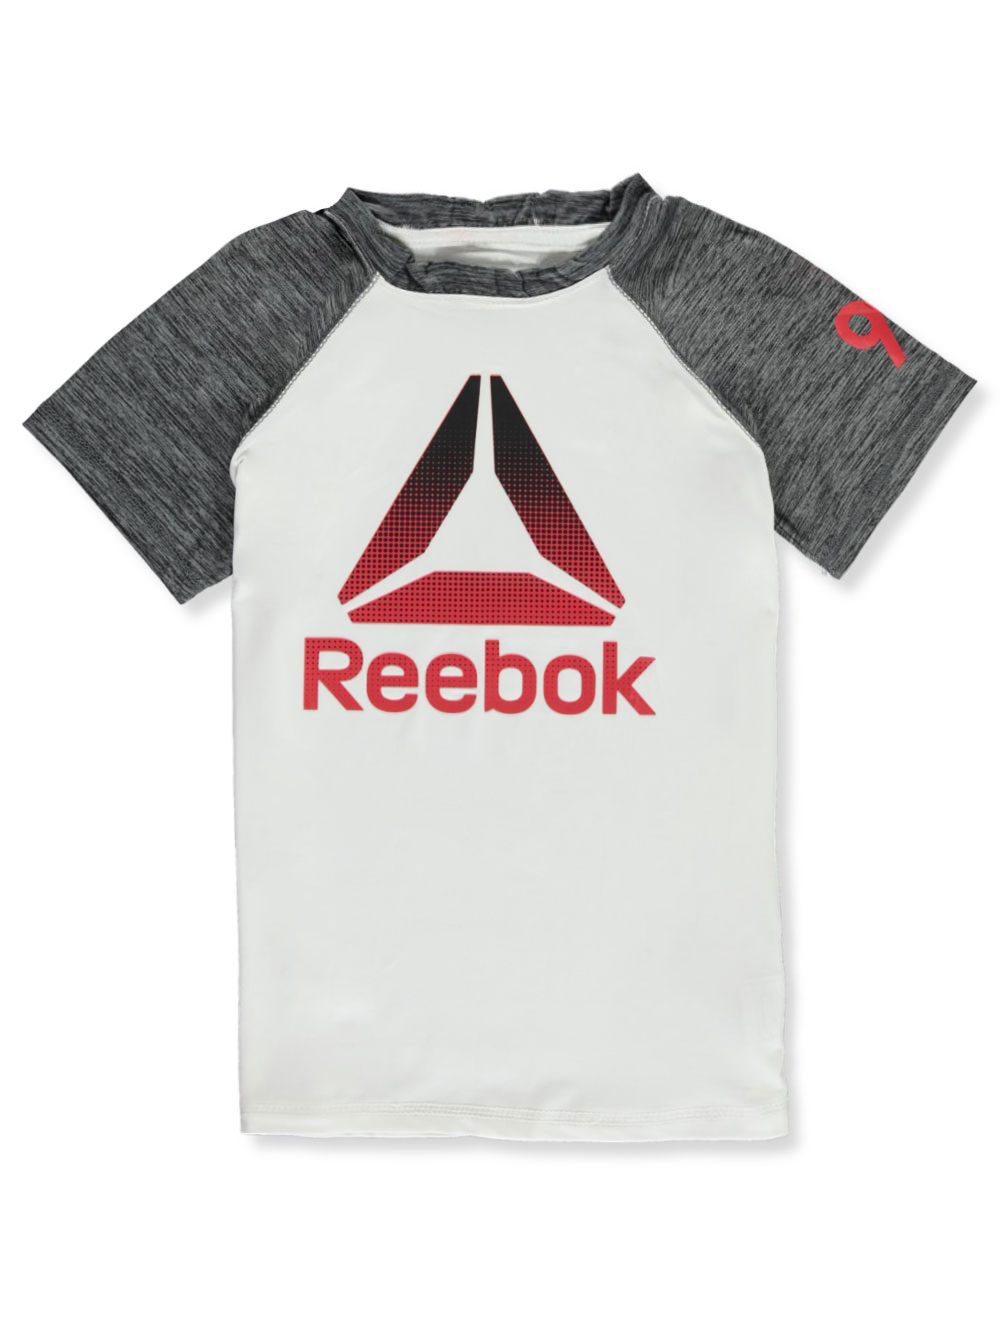 reebok t shirts for boys